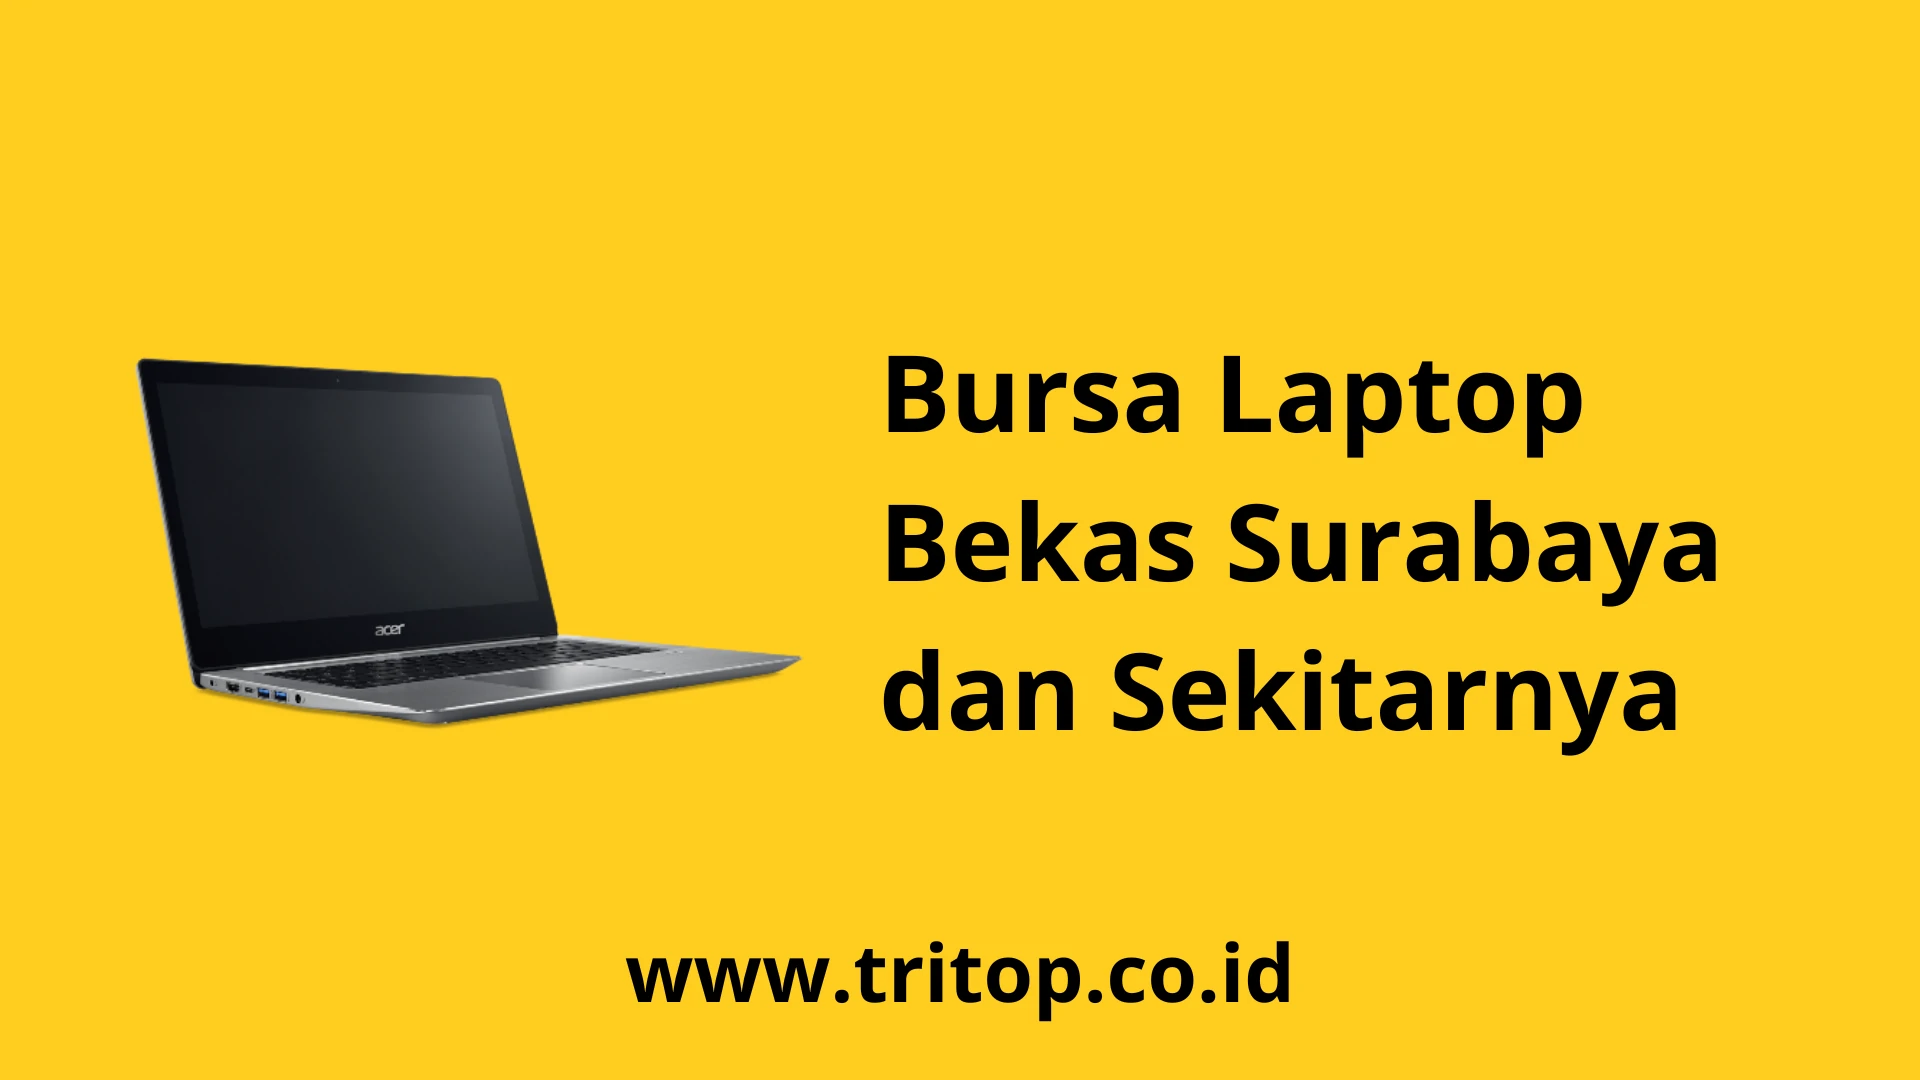 Bursa Laptop Bekas Surabaya www.tritop.co.id